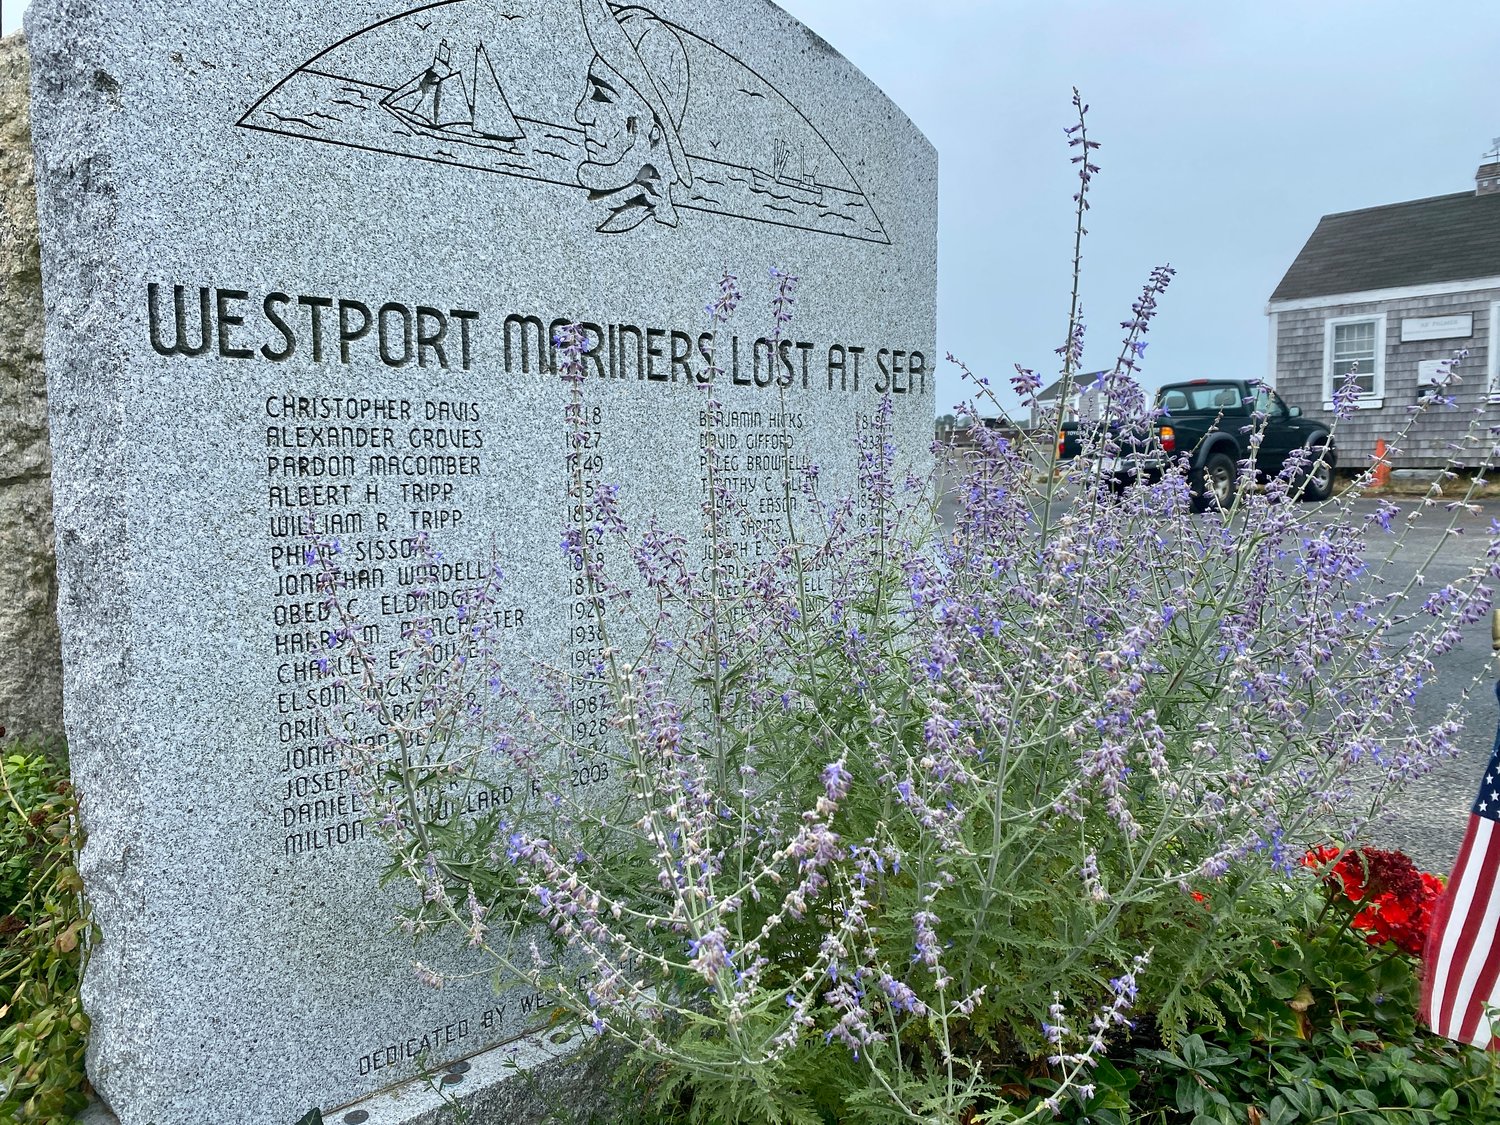 Westport's memorial to mariners lost at sea marks 29 lost.